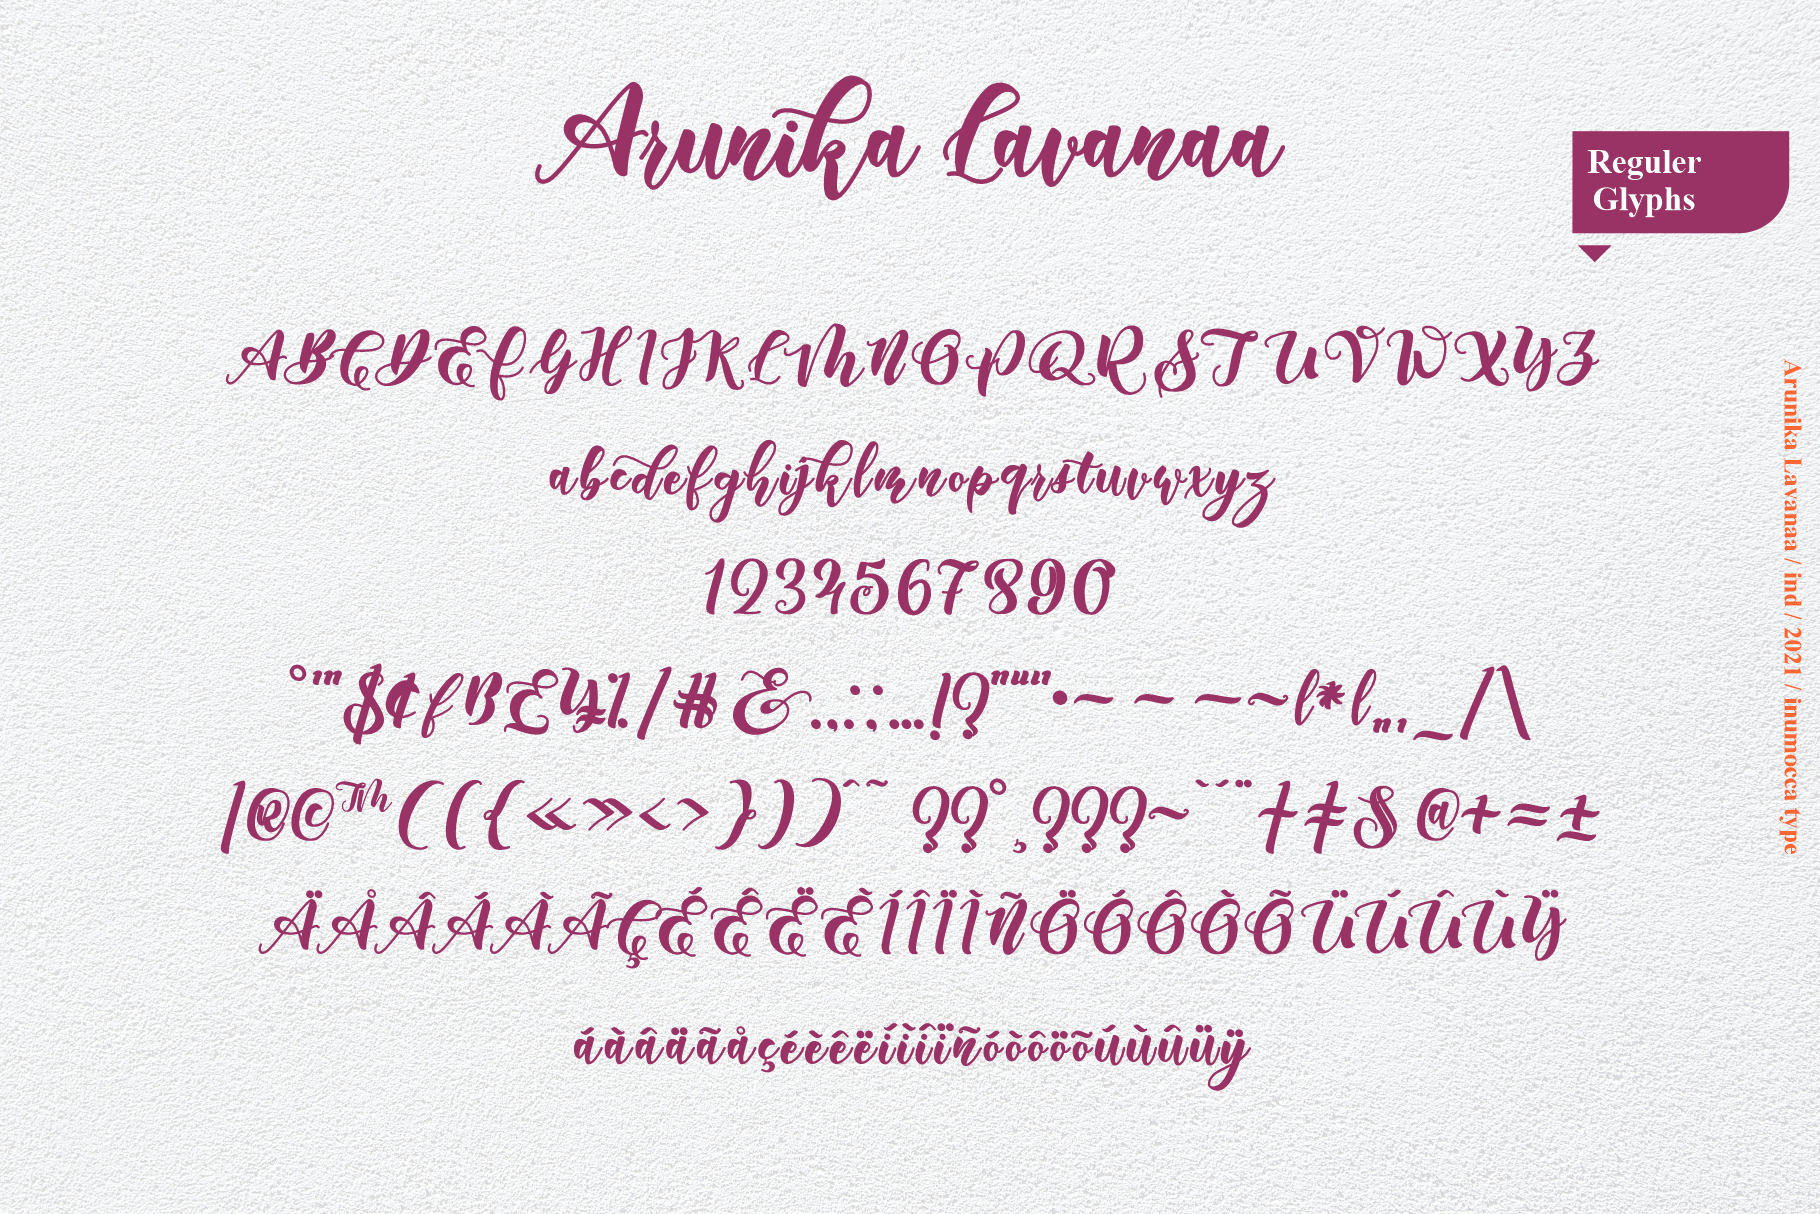 arunika lavanaa modern and stylish handwritten font all symbols example.